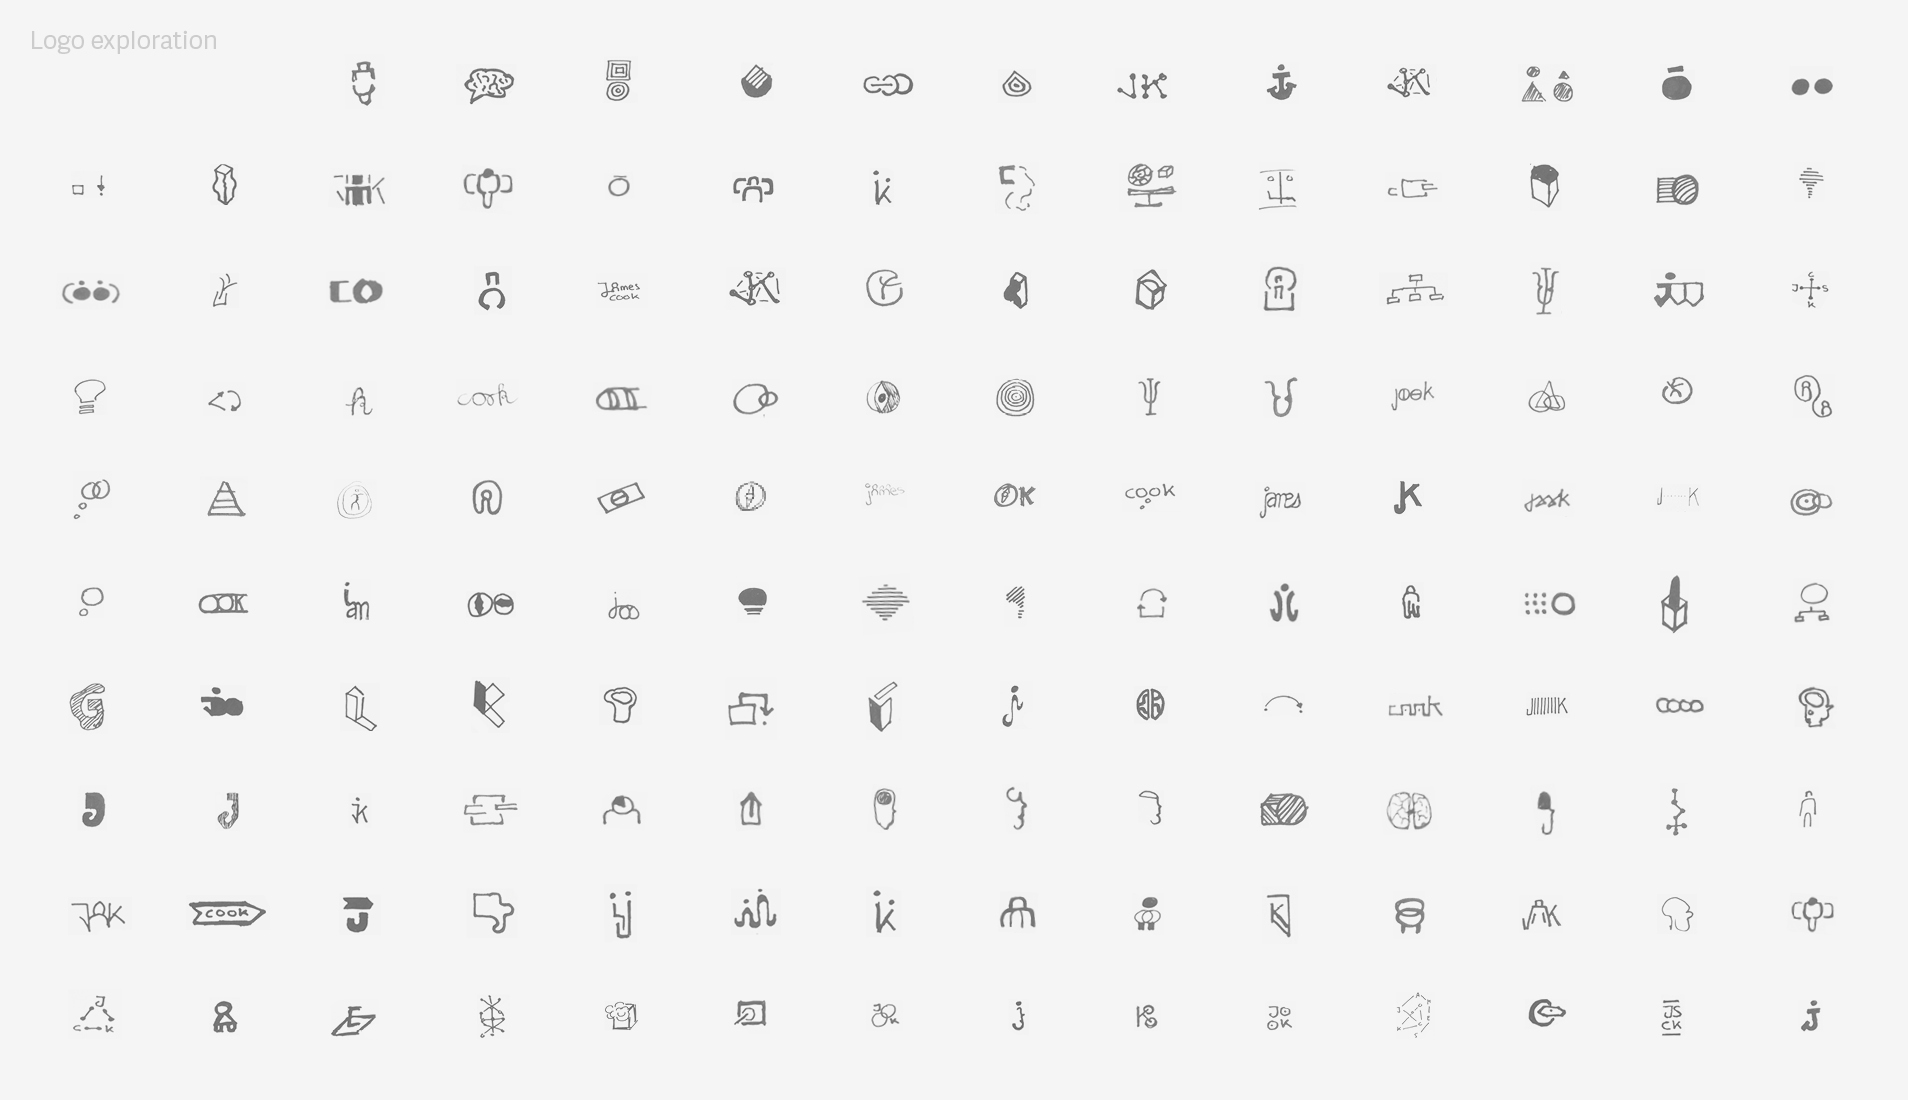 150 logo ideas